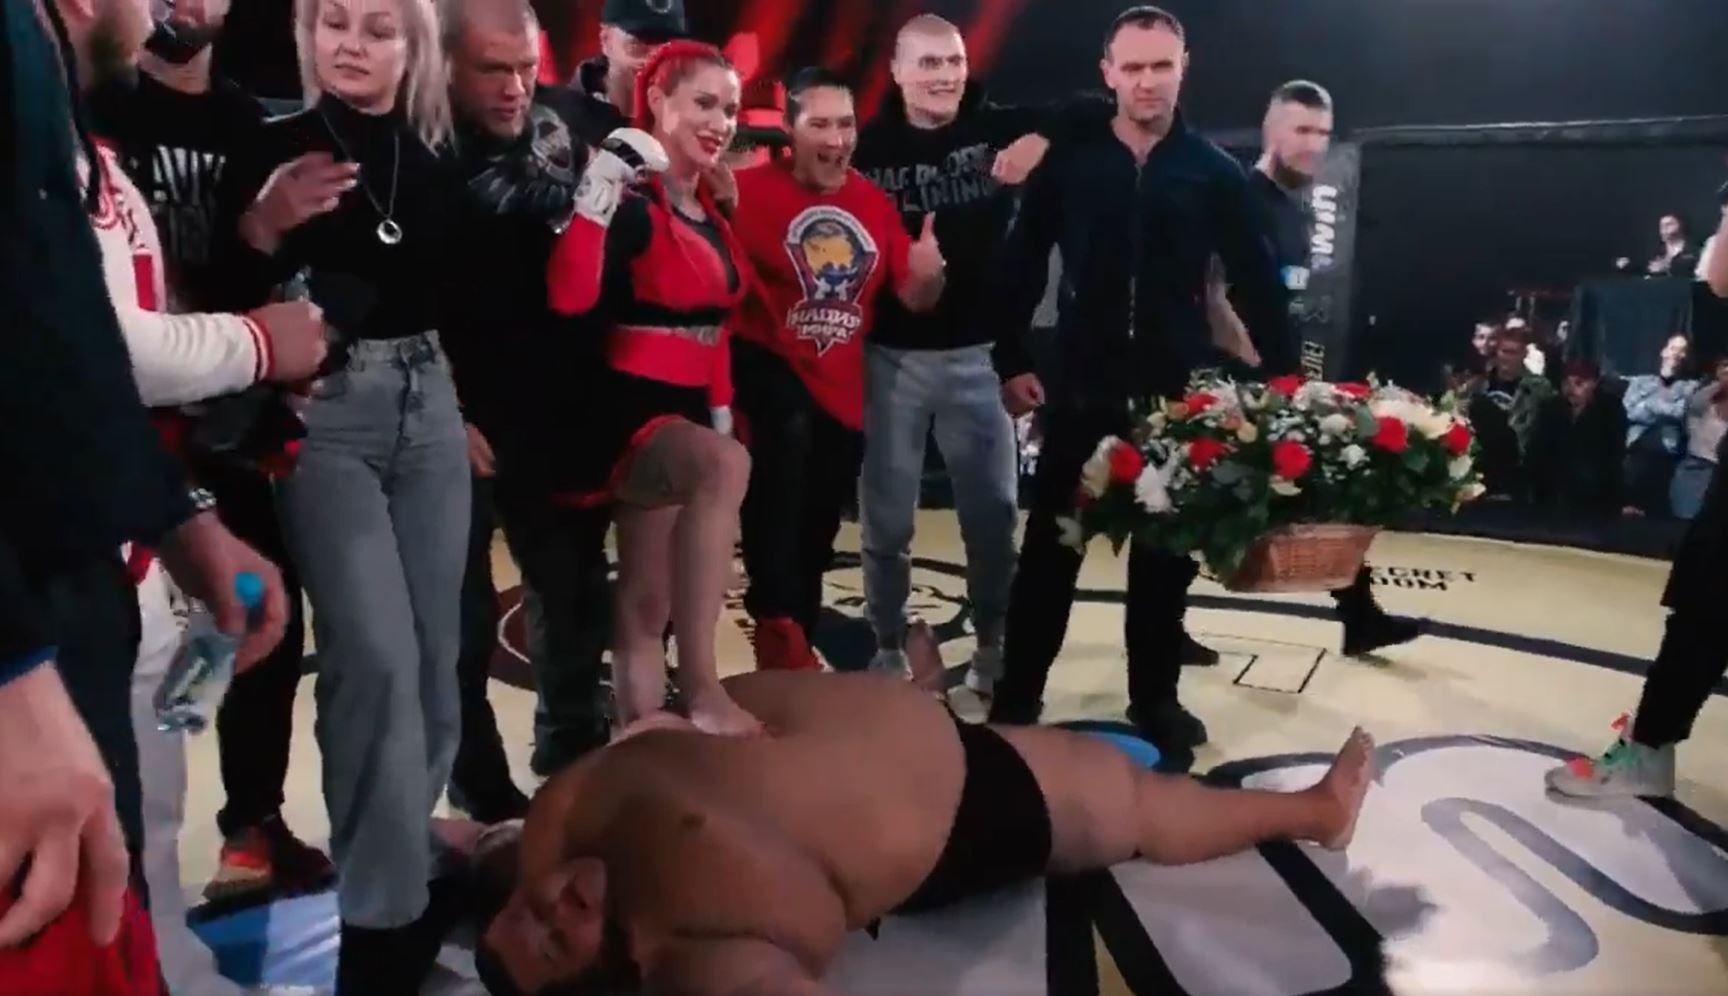 60kg female MMA fighter finishes 240kg YouTuber in Russia La